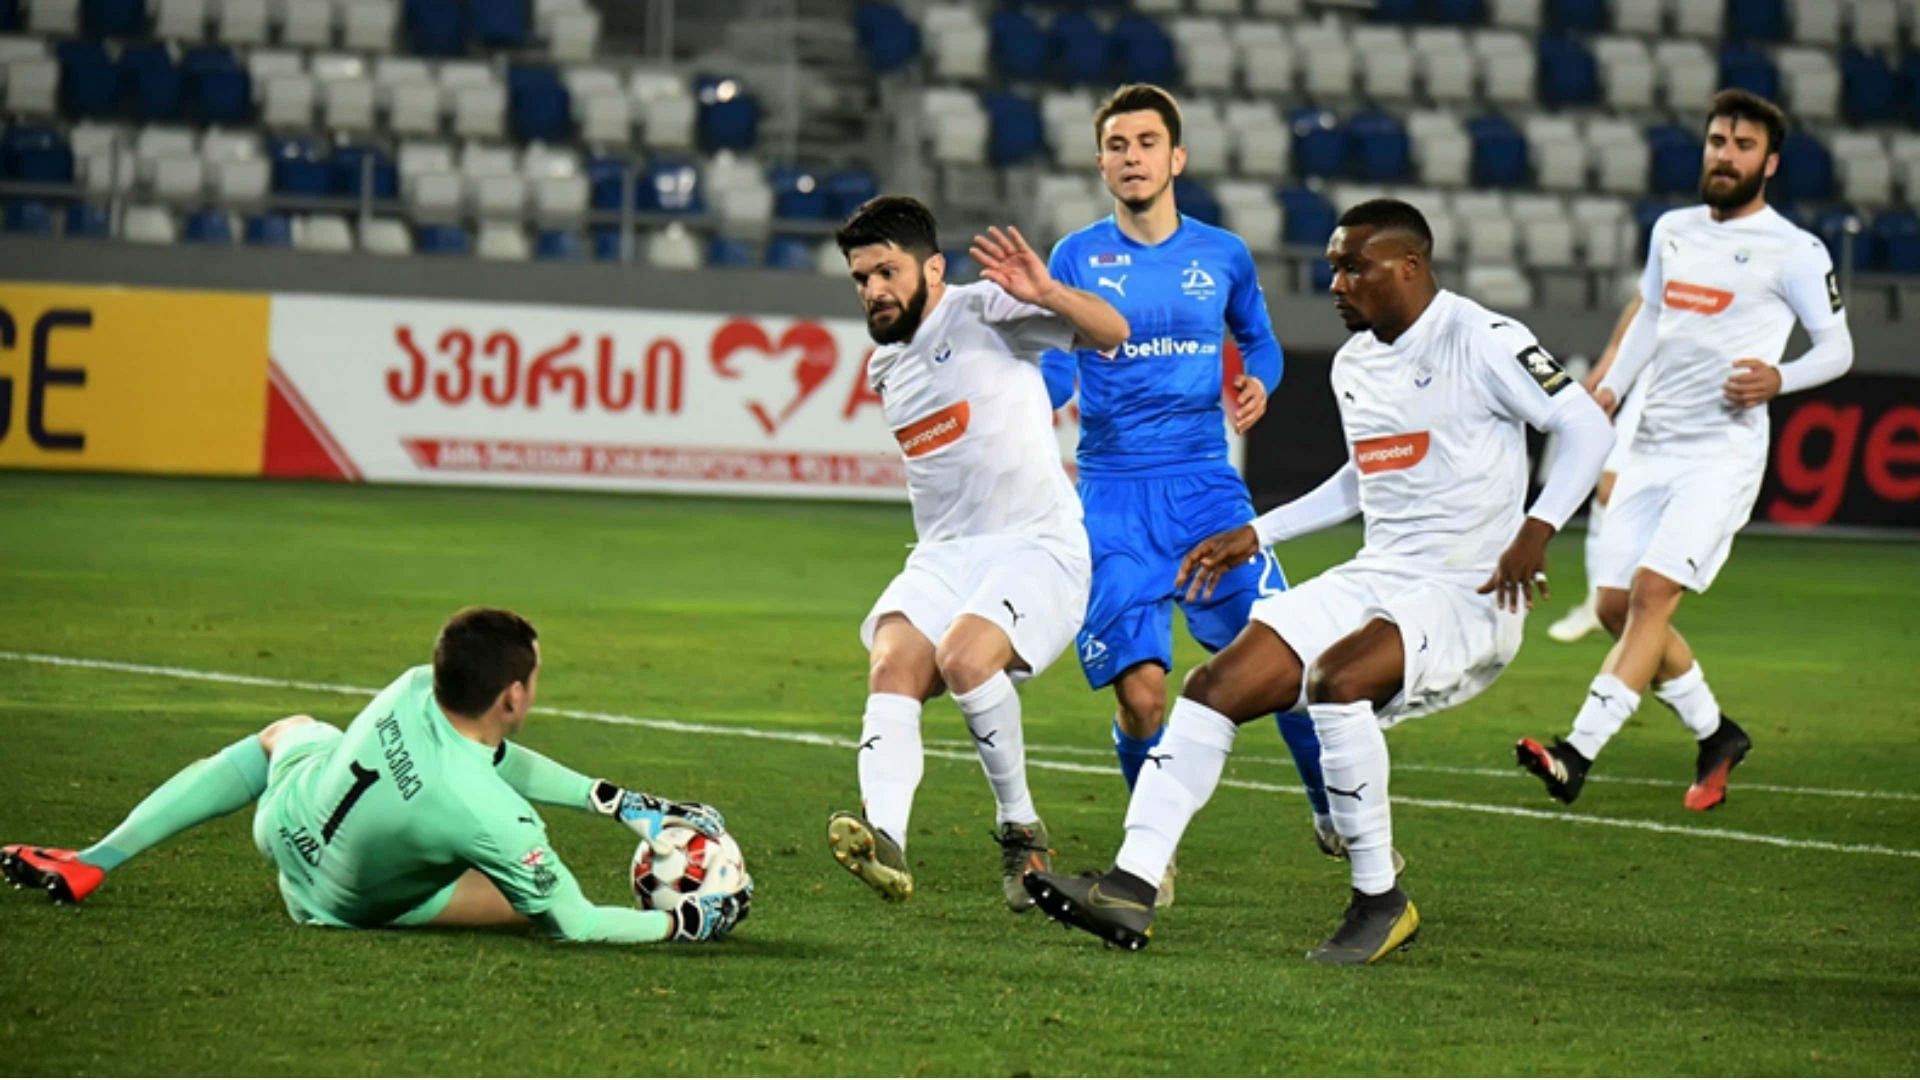 ▶️ Dinamo Batumi vs KF Tirana Live Stream & on TV, Prediction, H2H